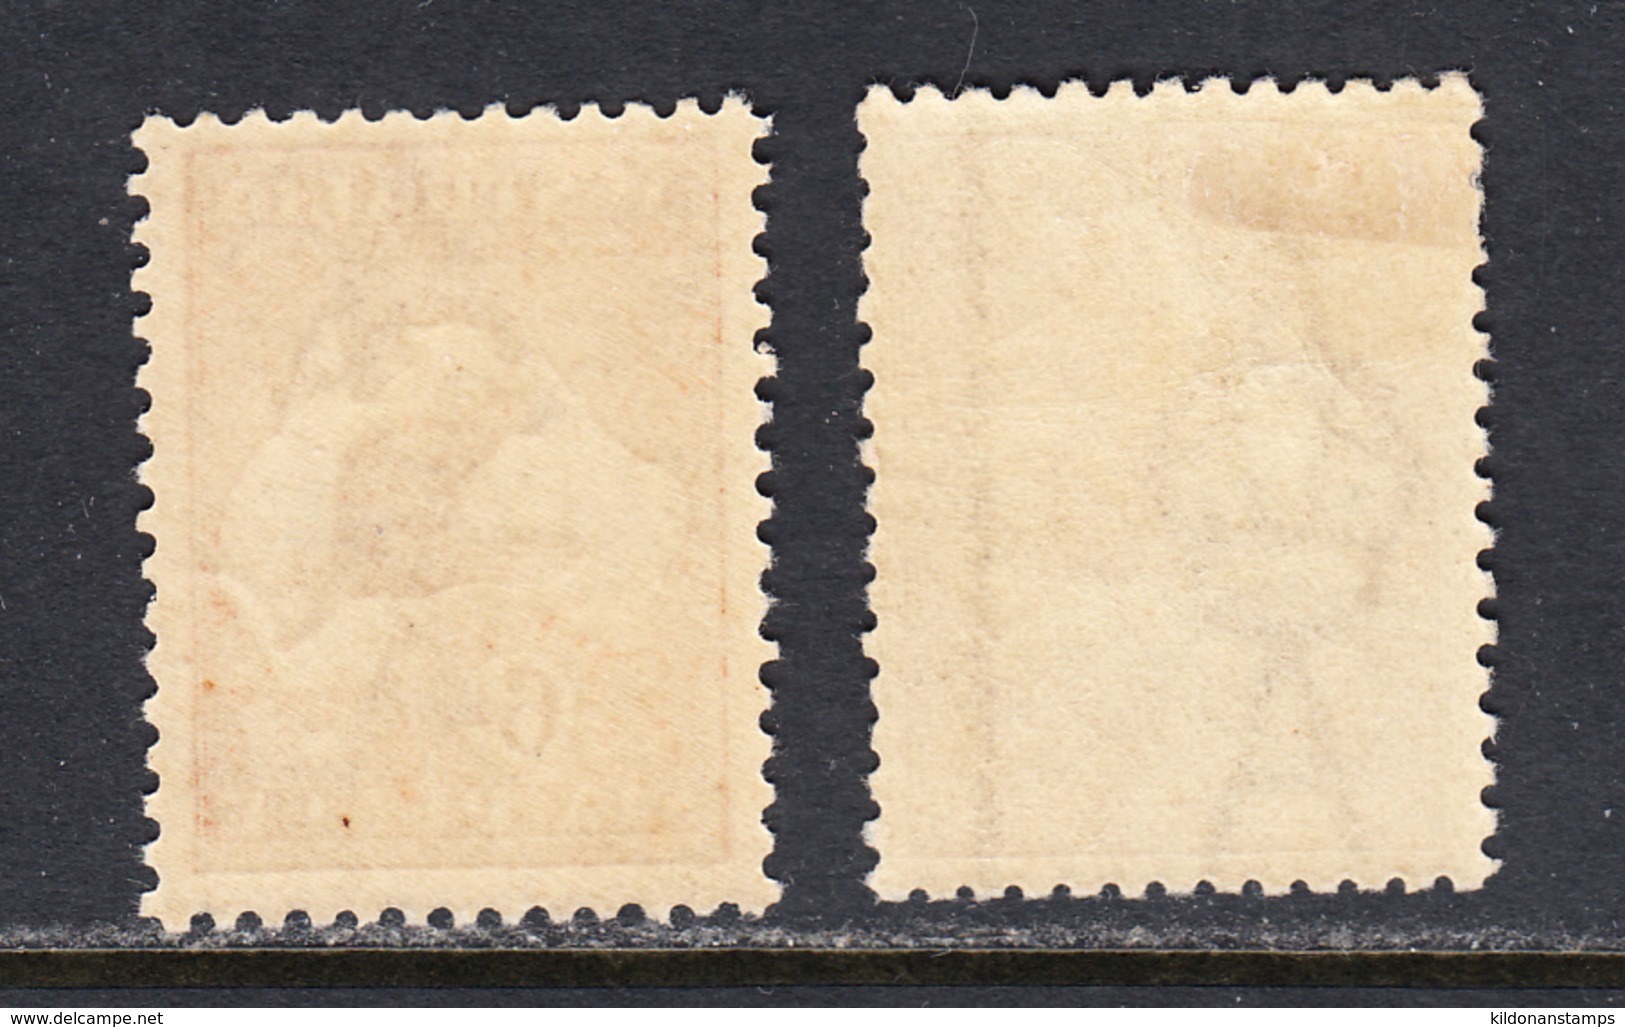 Australia 1923-24 Kangaroo, Mint Mounted, 3rd Wmk, Sc# ,SG 73-74 - Mint Stamps